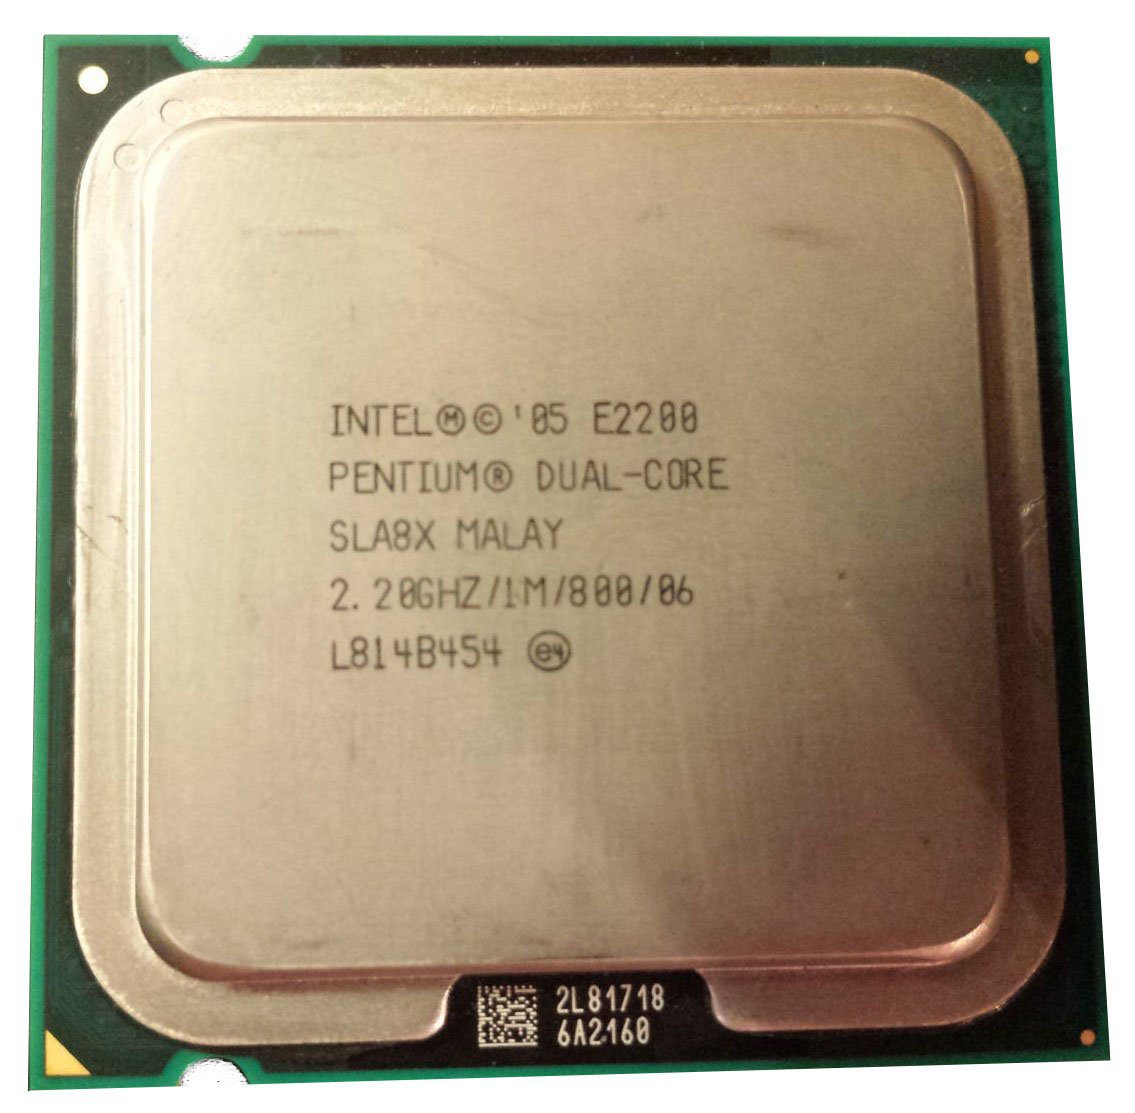 CPU Processor Intel Pentium Dual Core E2200 SLA8X 2.20Ghz 1M 800 06 socket 775